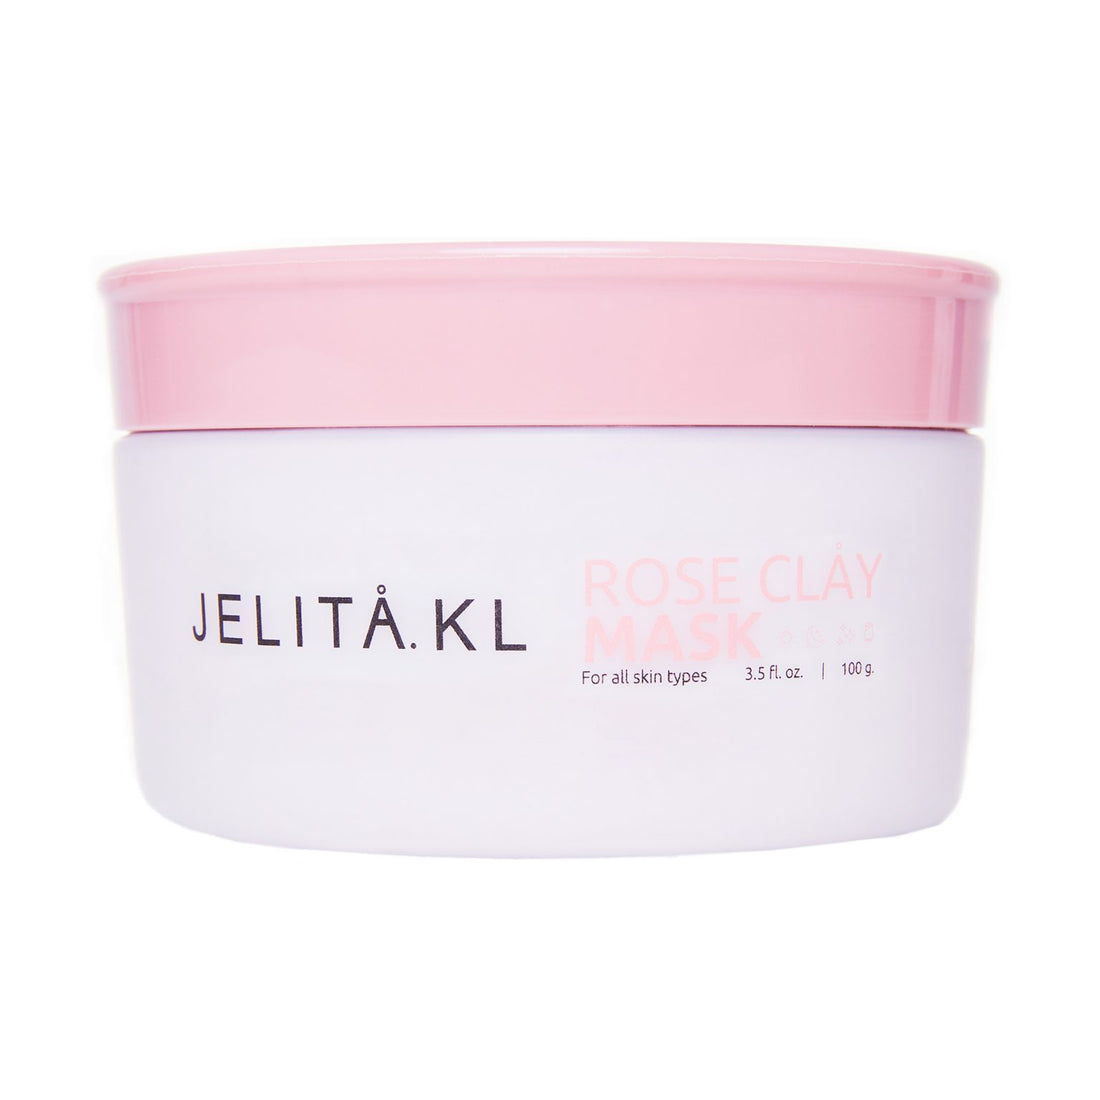 JelitaKL Rose Clay Mask 2.0